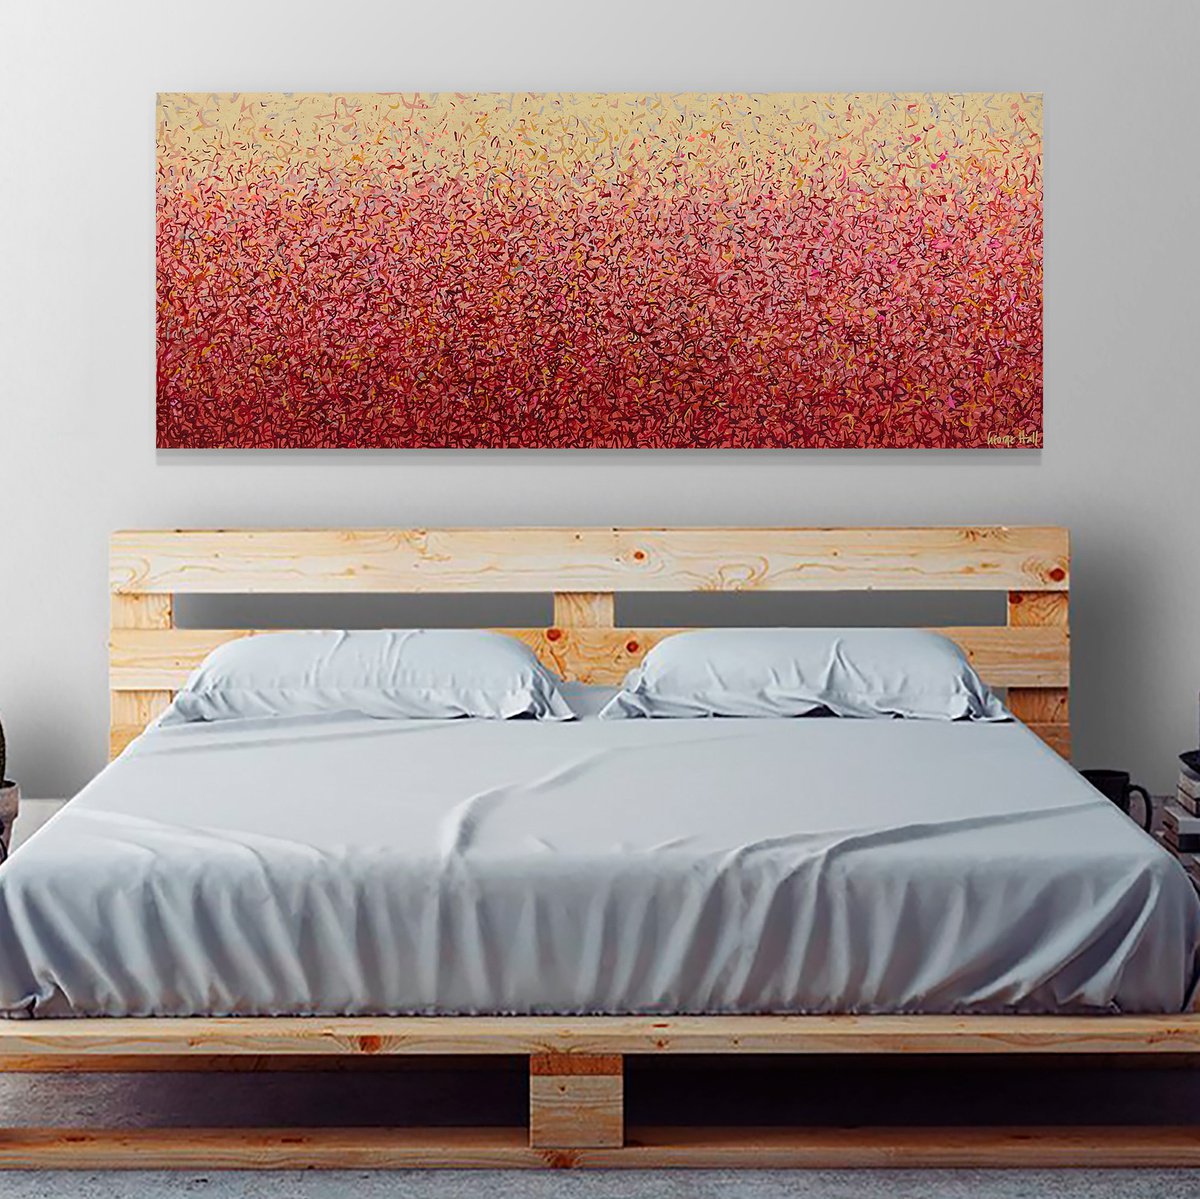 Oondiri Mornings 152 x 61cm acrylic on canvas by George Hall